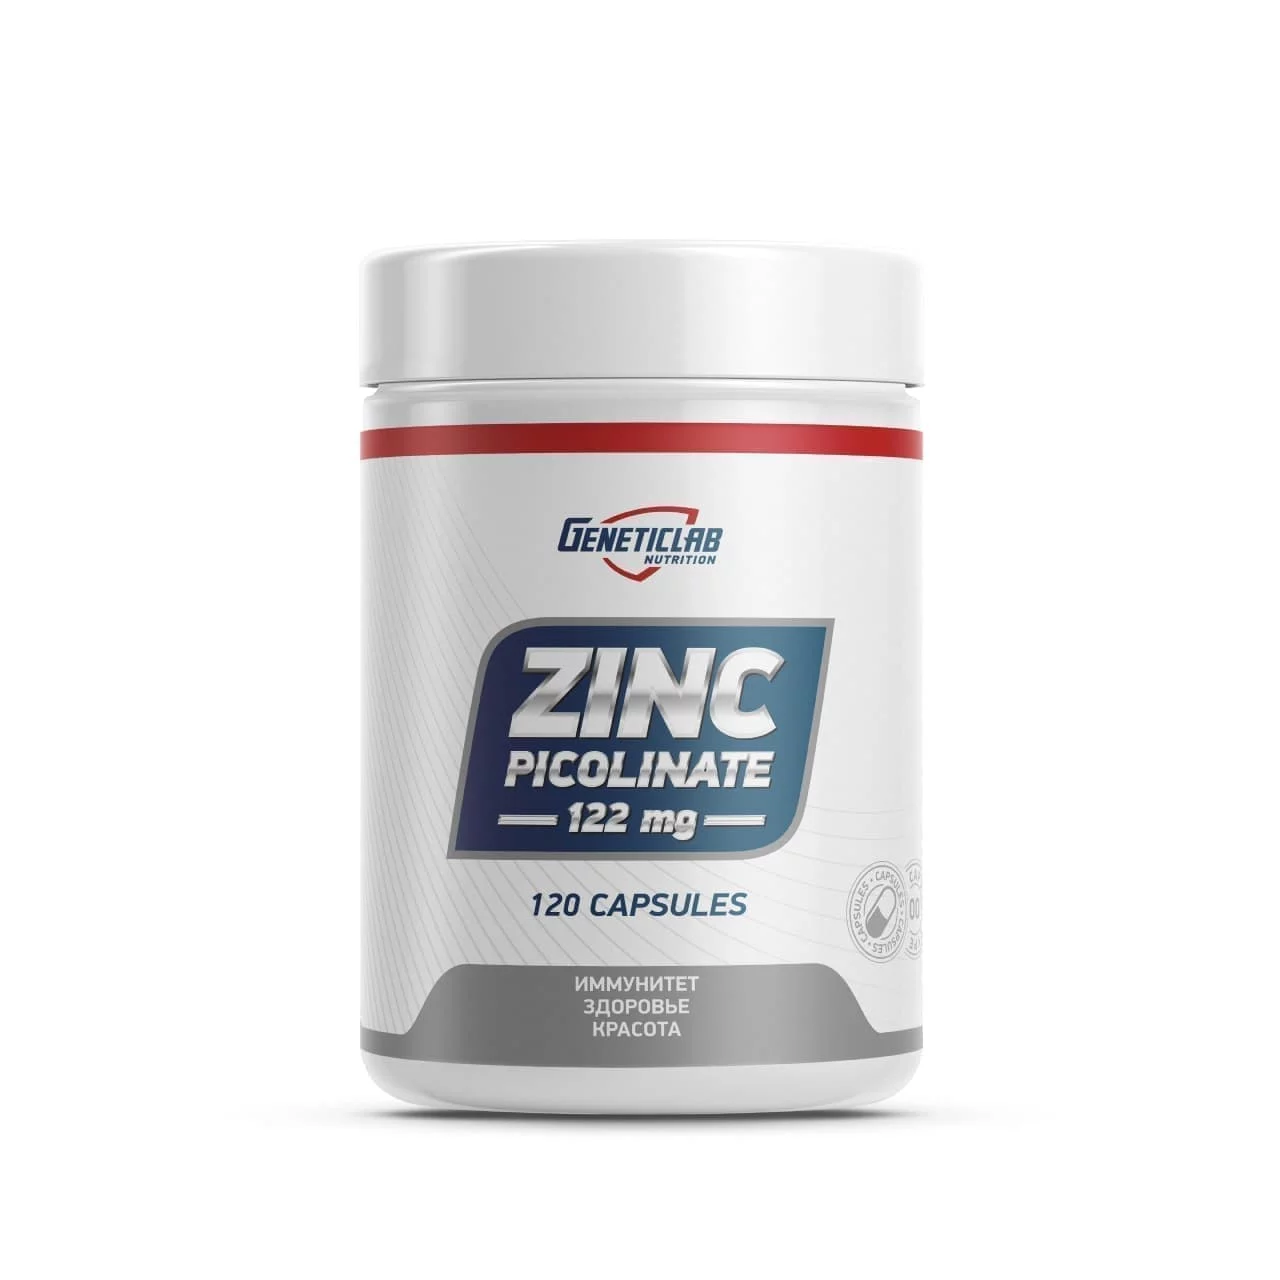 GeneticLab Zinc Picolinate 120 caps фото